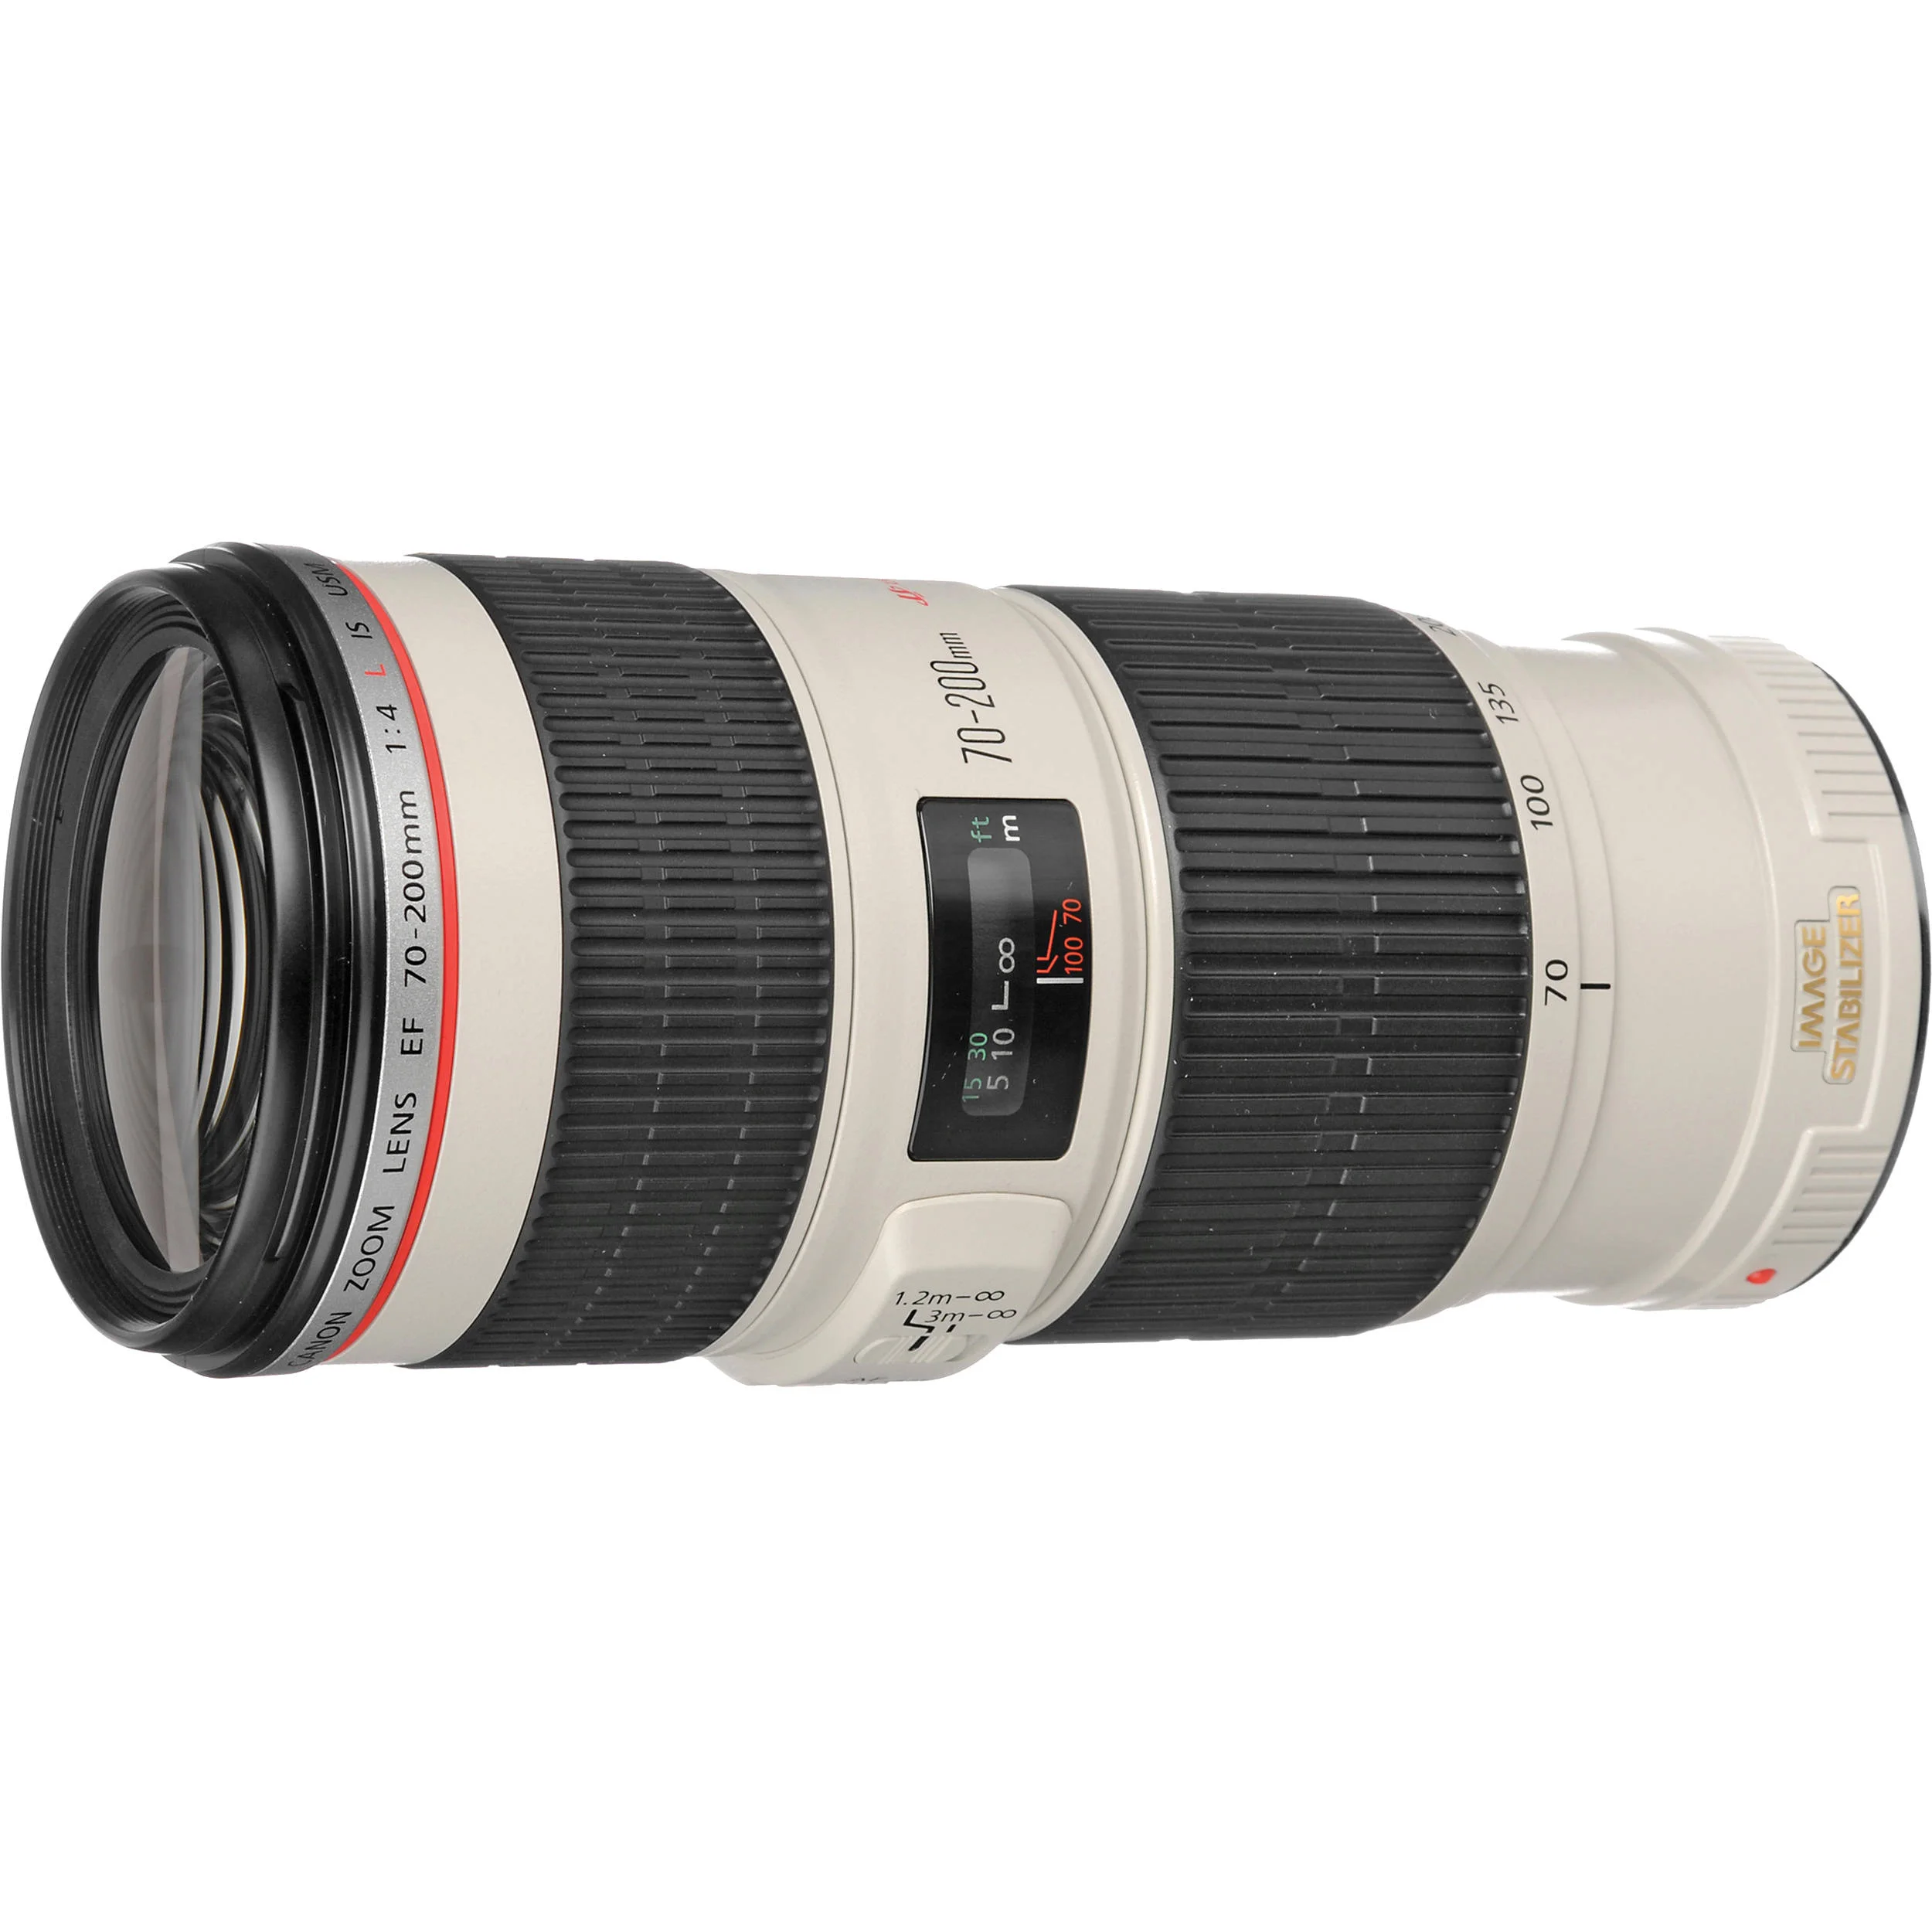 Used EF 70 200mm f/4L IS USM telephoto zoom full frame lens Canon high end SLR telephoto lens for canon